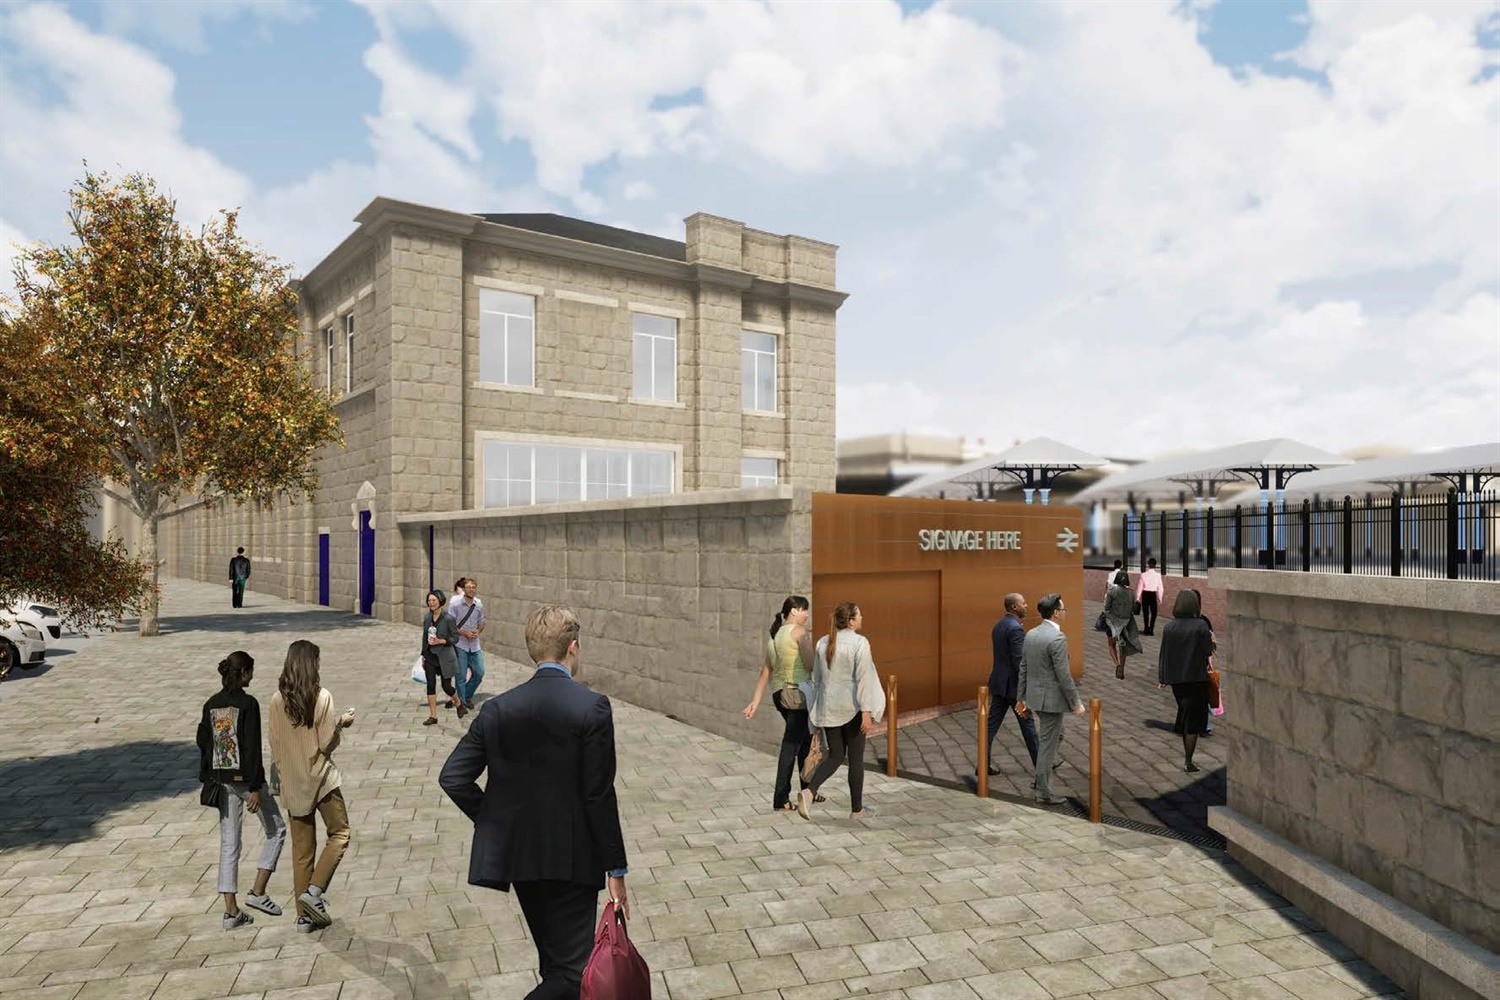 Newcastle Central Station set for renovation 